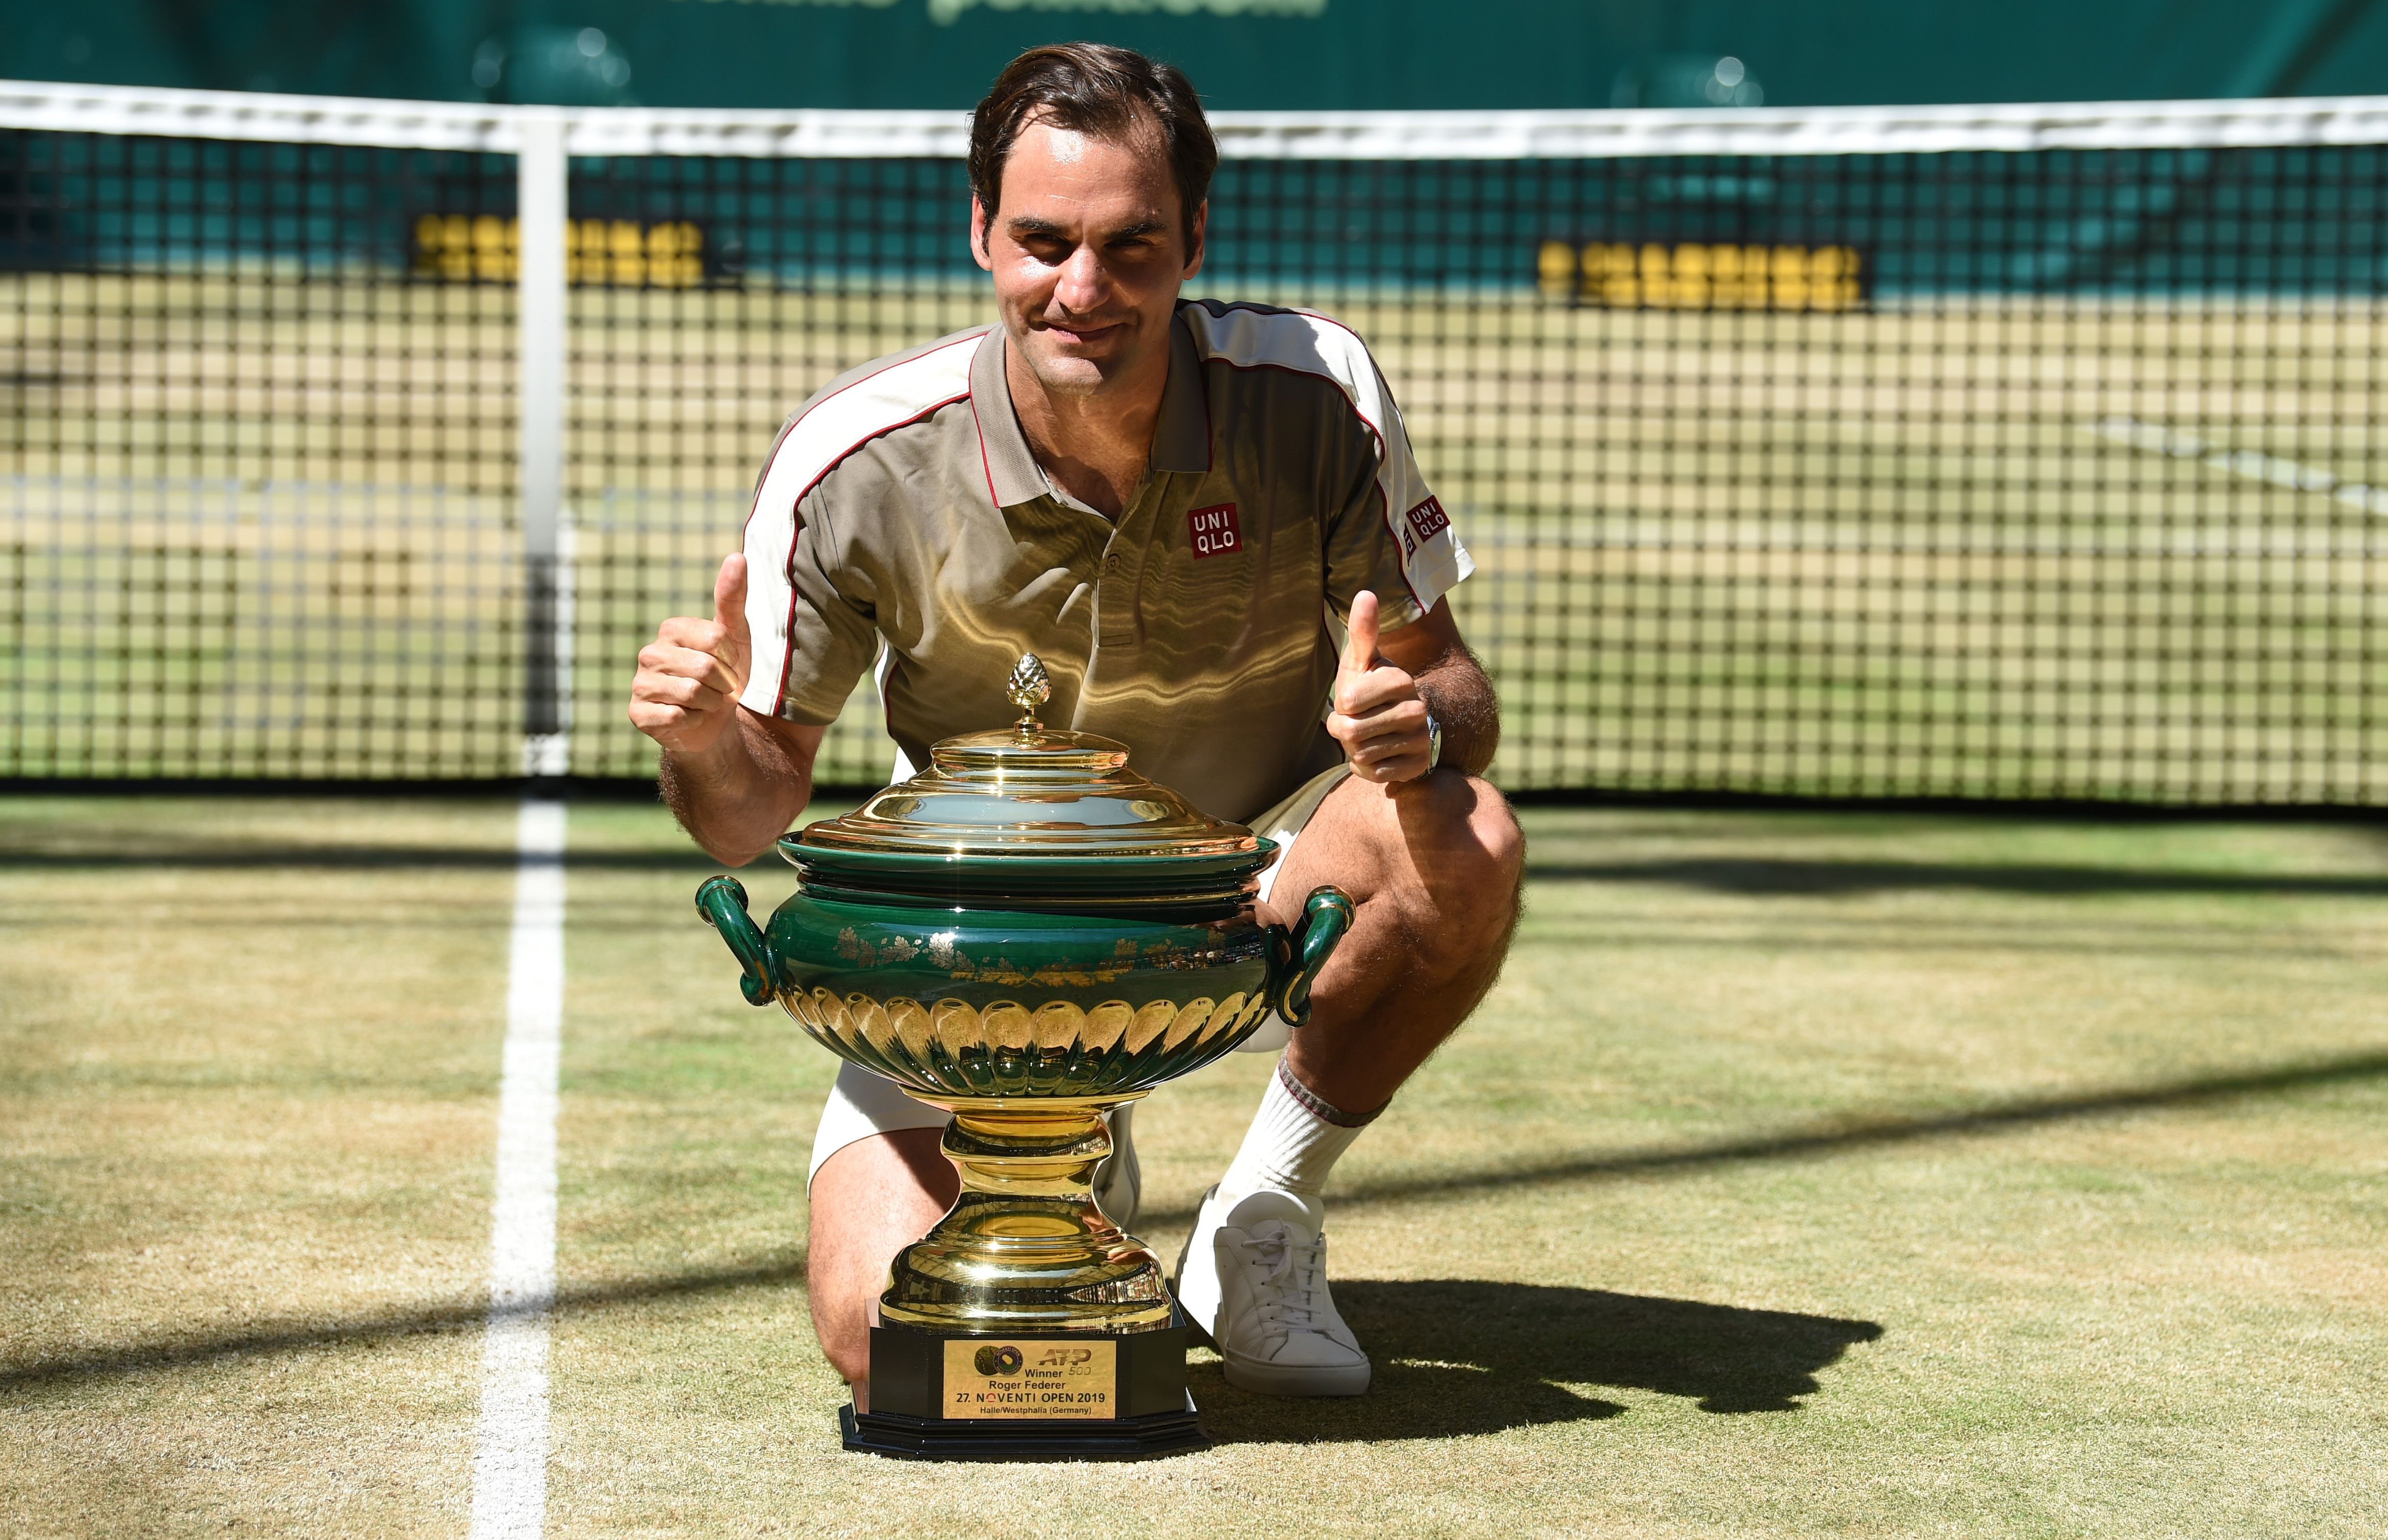 Federer achieves new milestone in winning 10th Halle title over Goffin